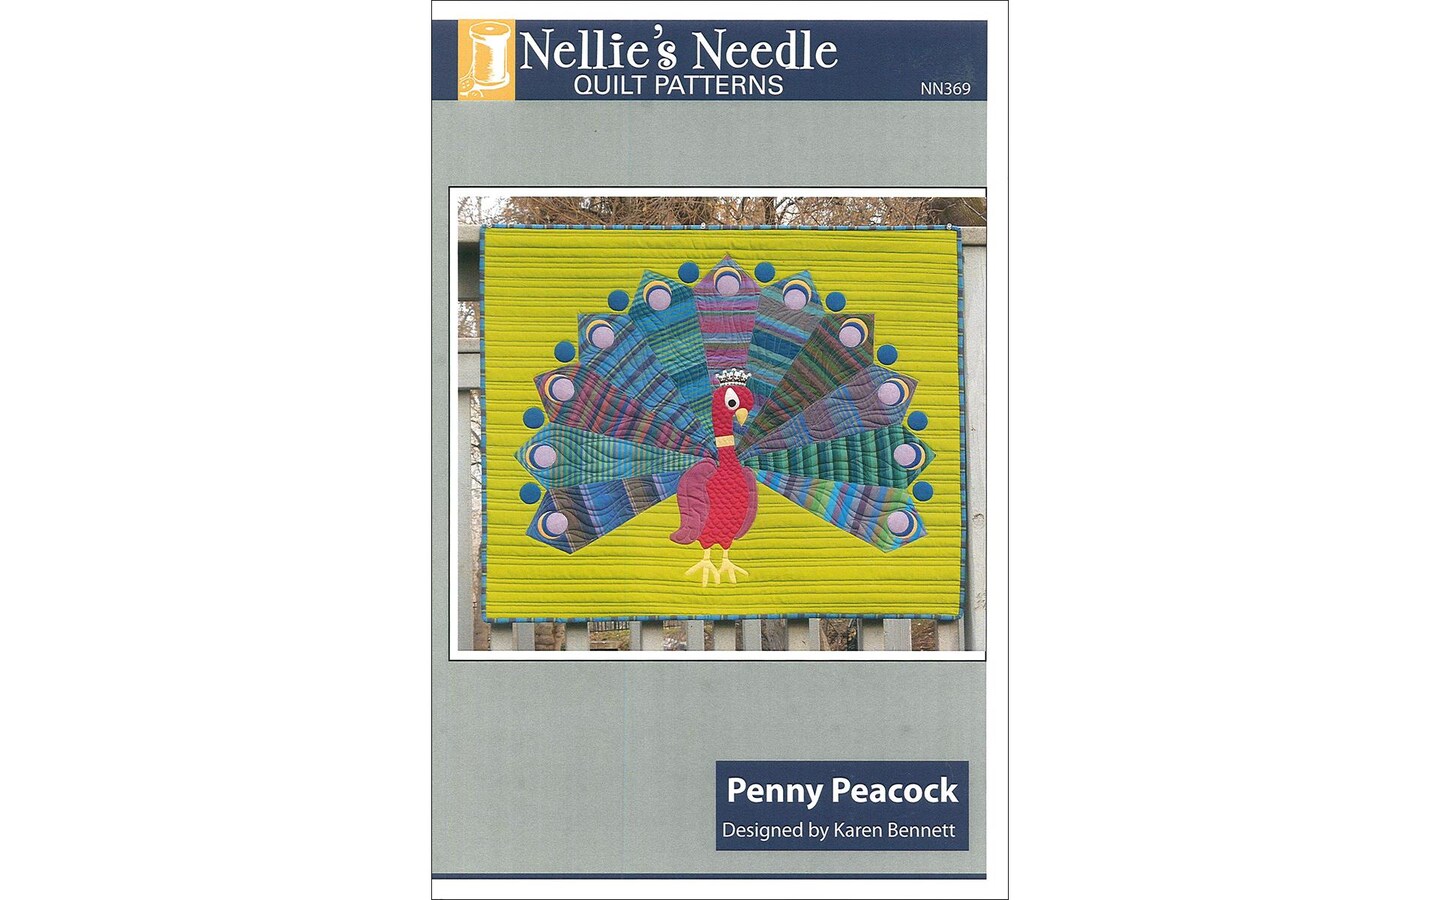 Nellies Needle Penny Peacock Ptrn Michaels 5068